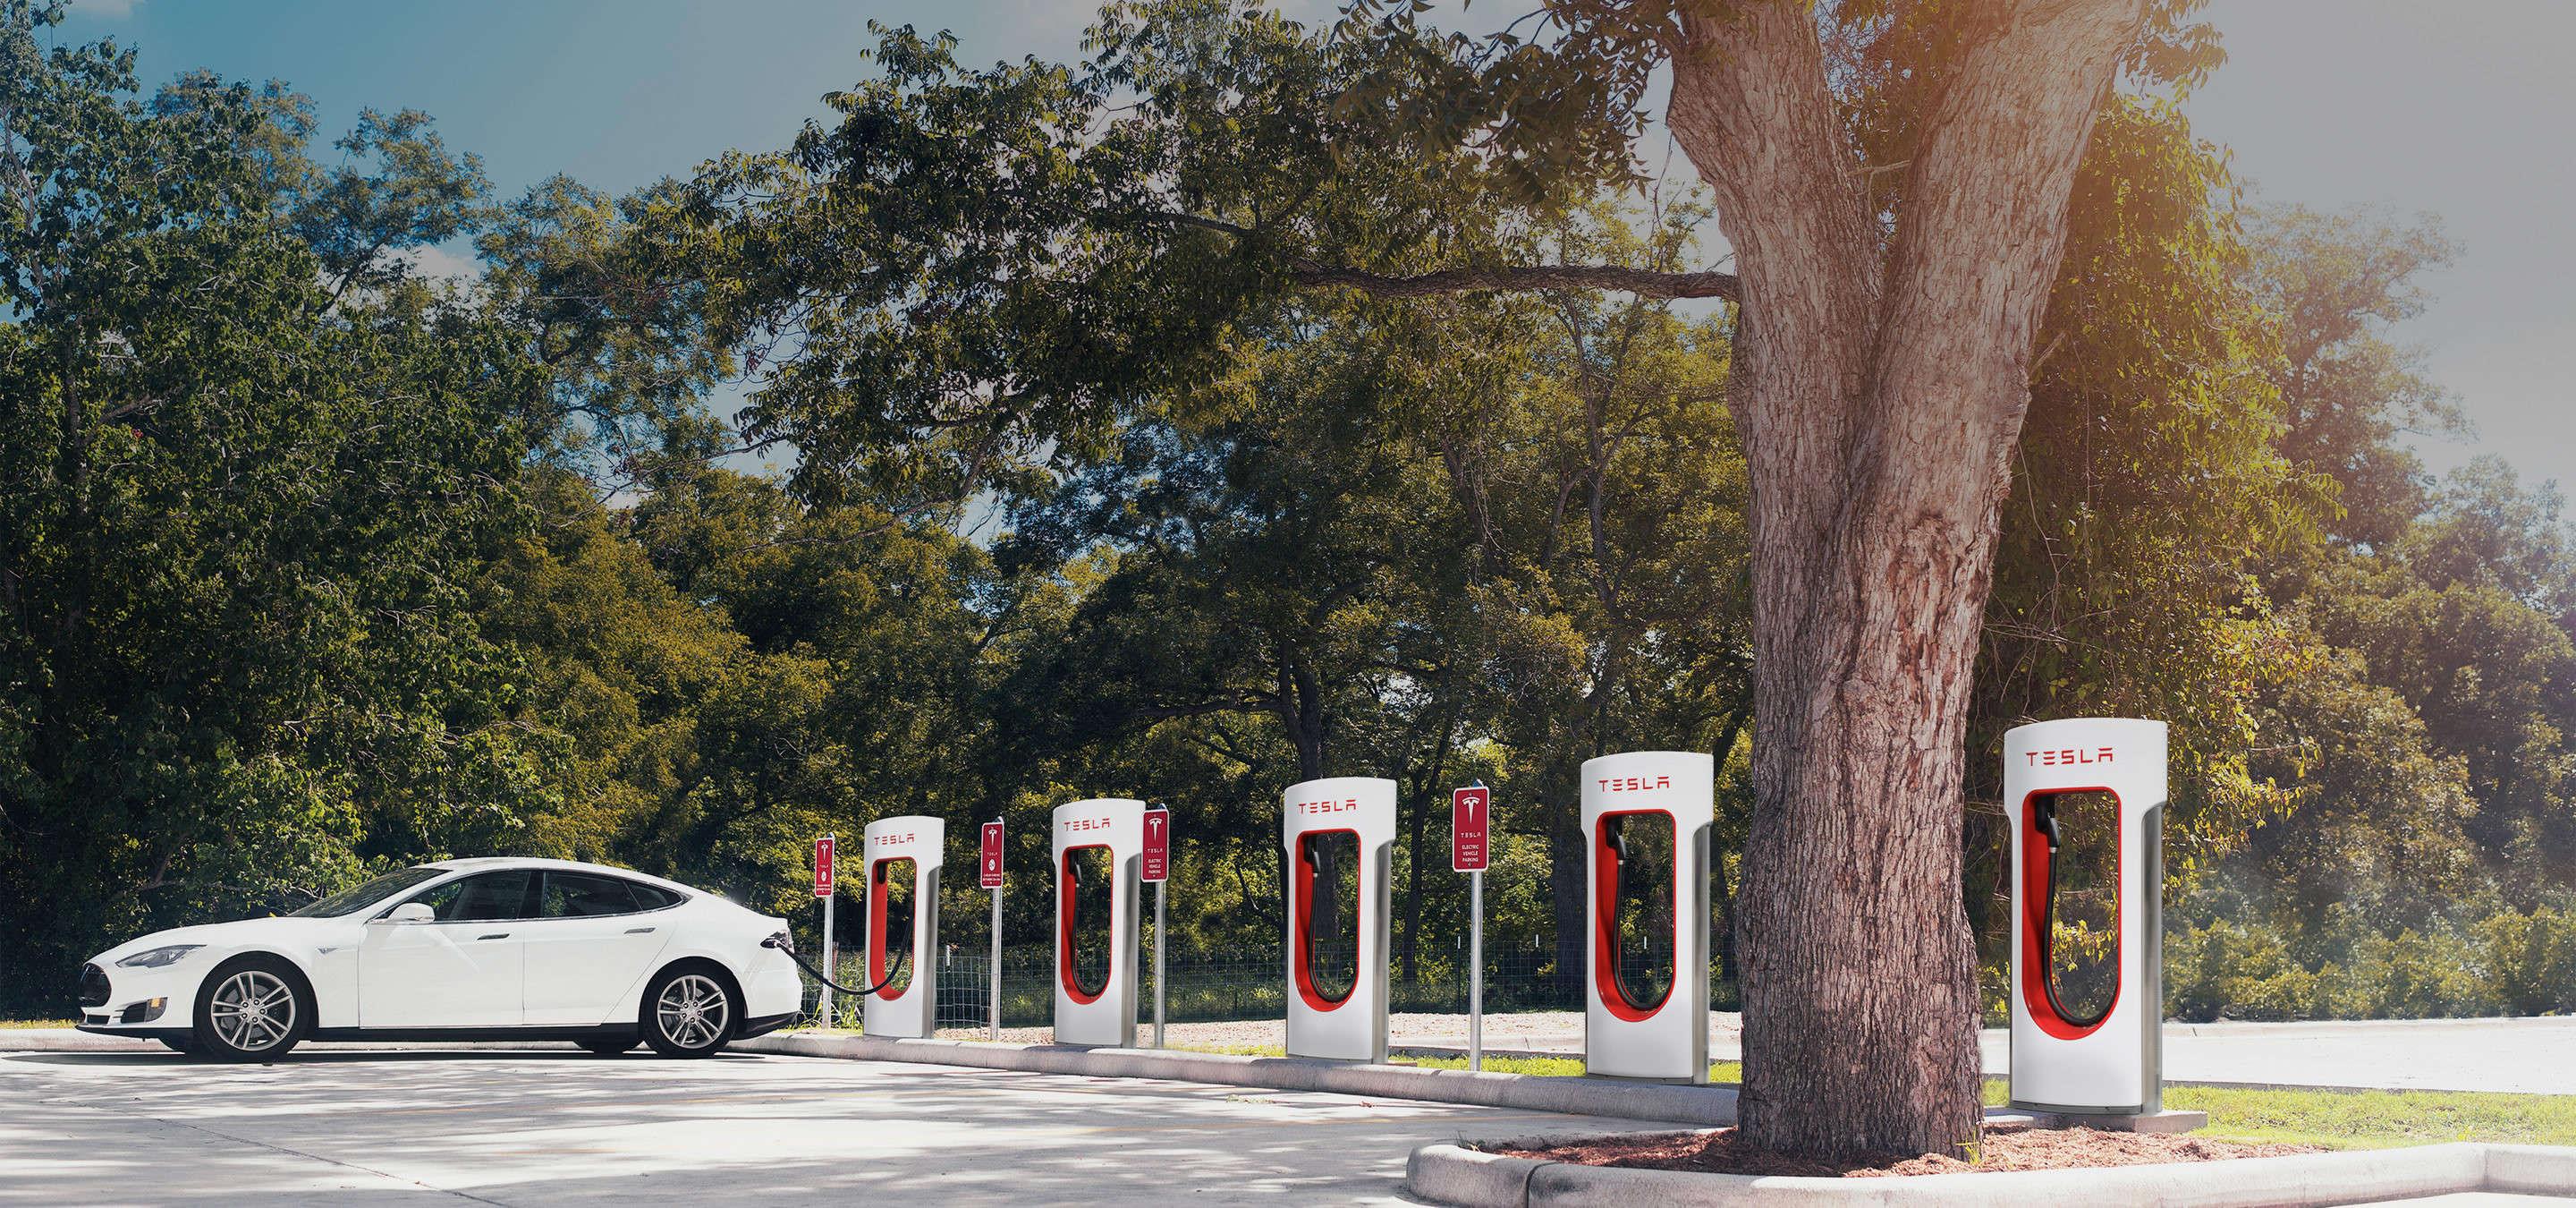 Tesla Supercharger Logo - Supercharging Your Tesla Will No Longer Be Free